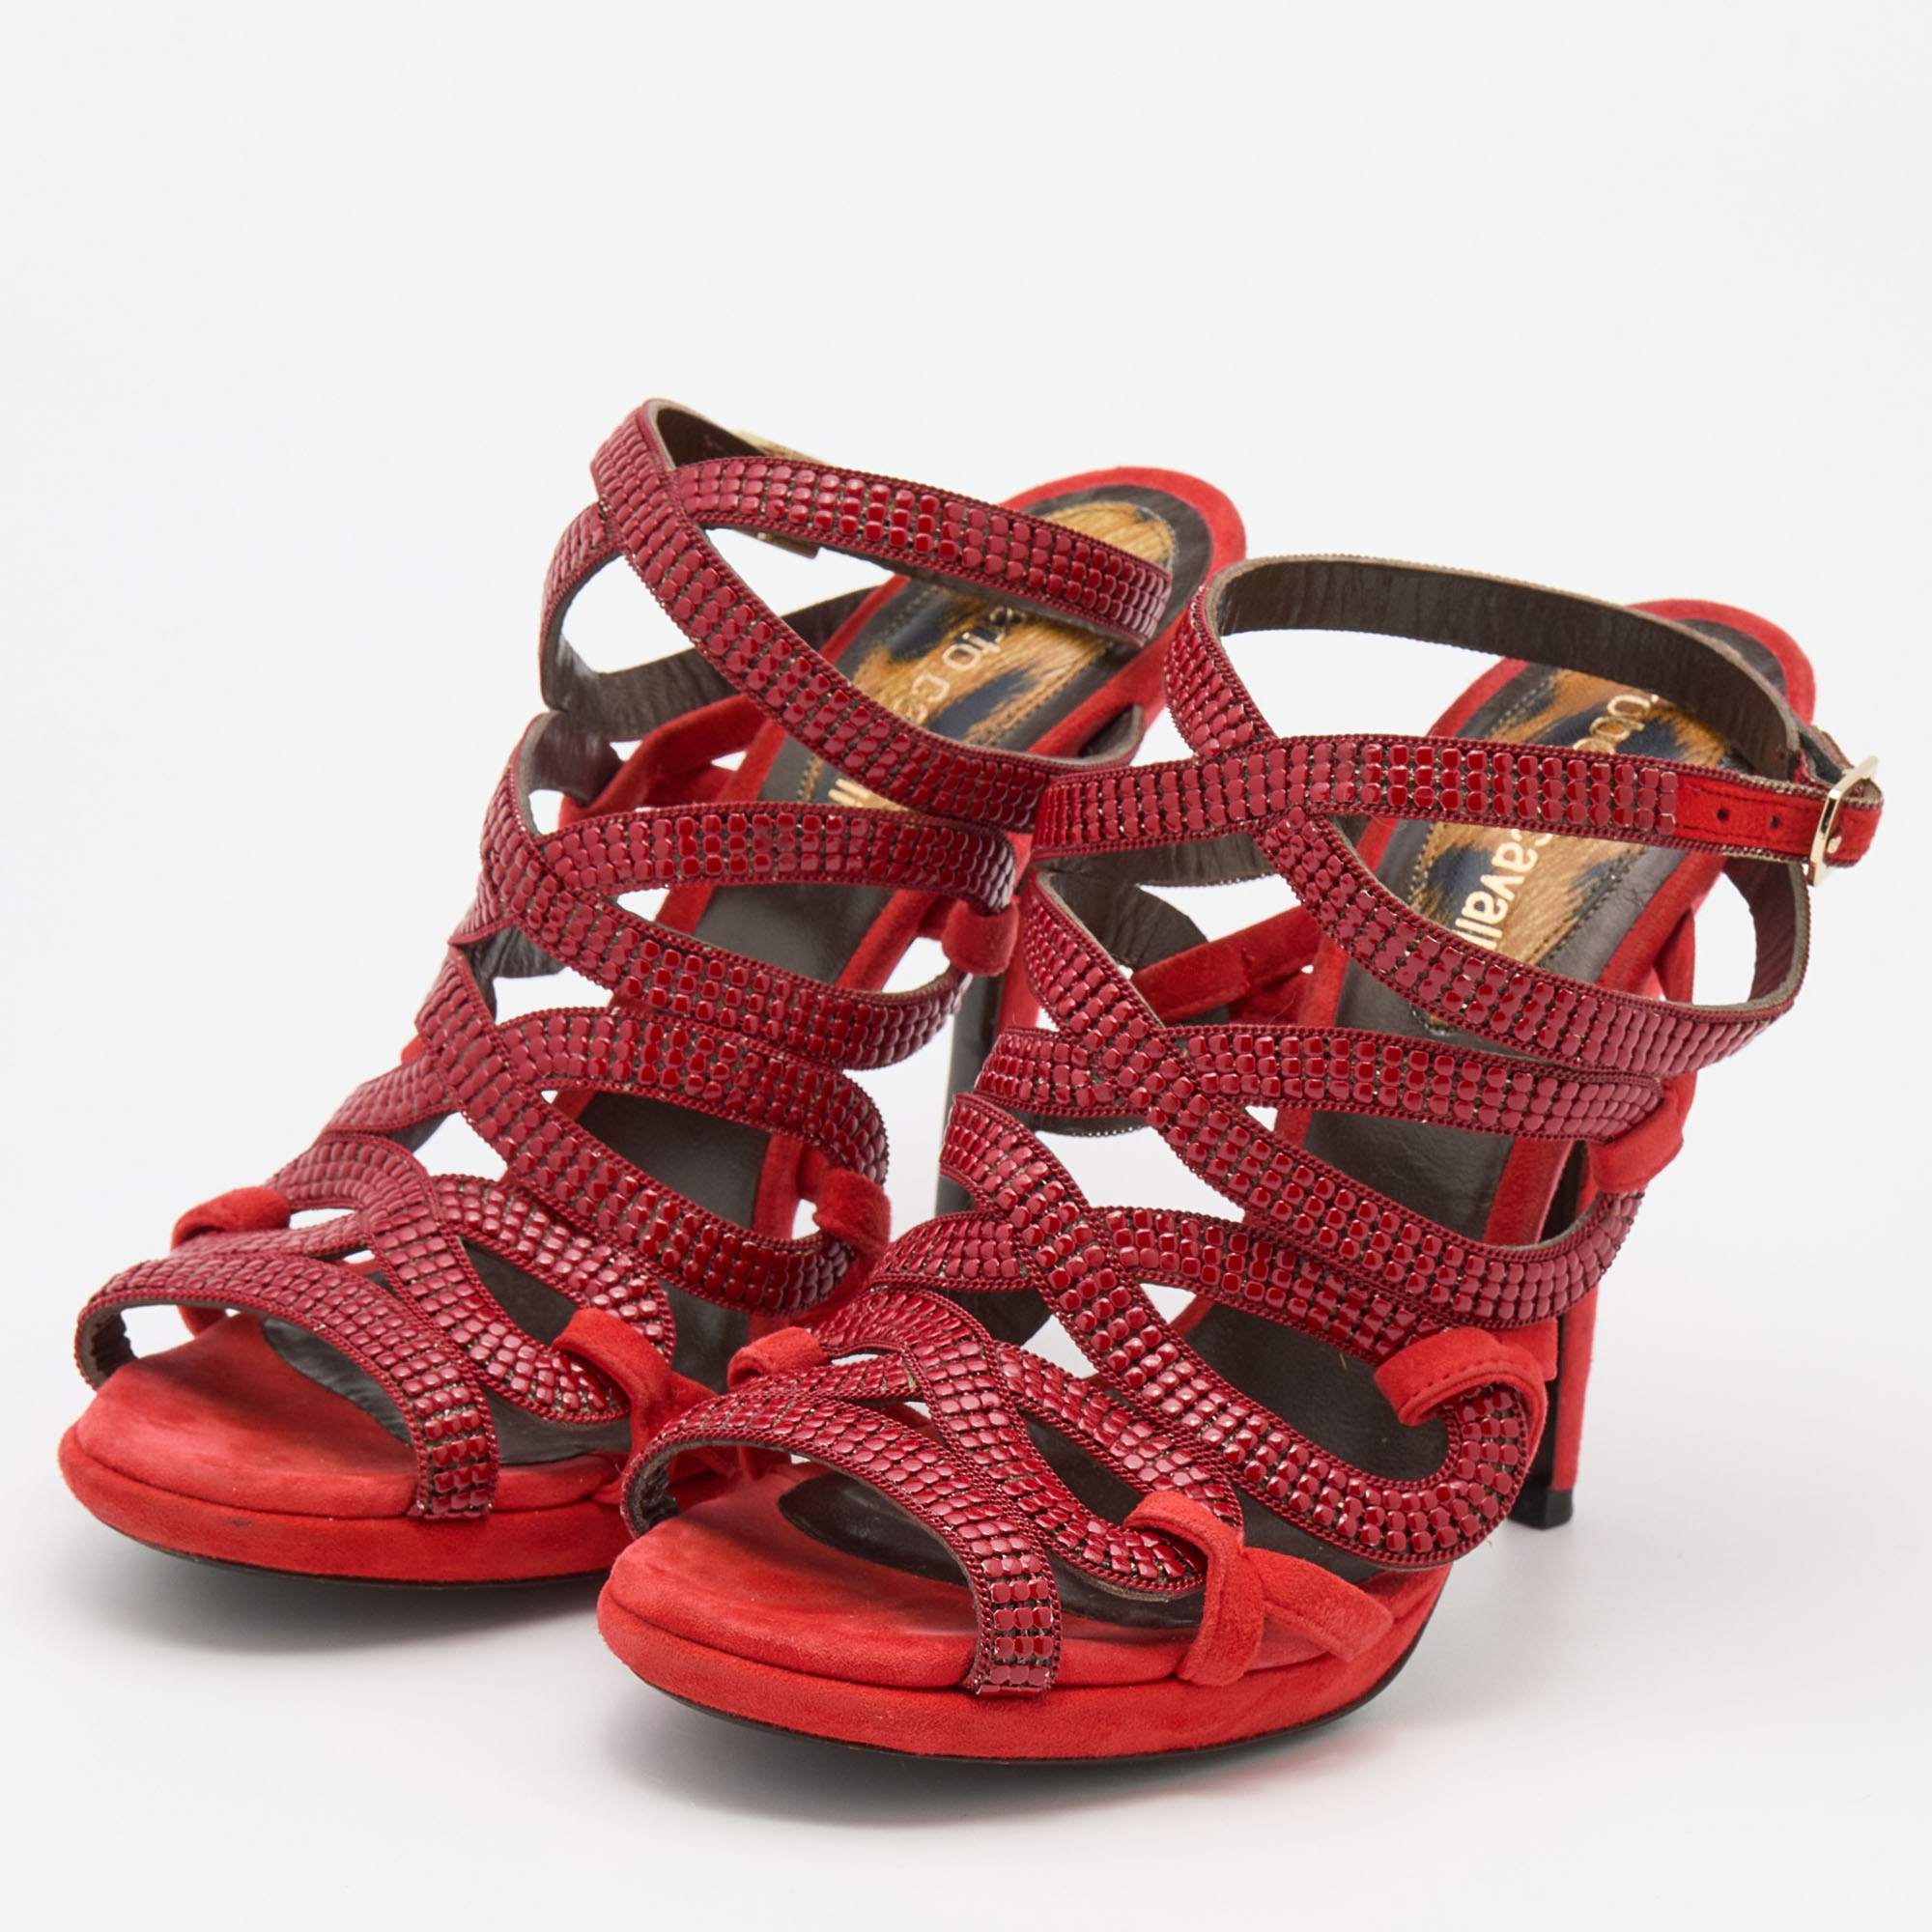 

Roberto Cavalli Red Suede Crystal Embellished Sandals Size